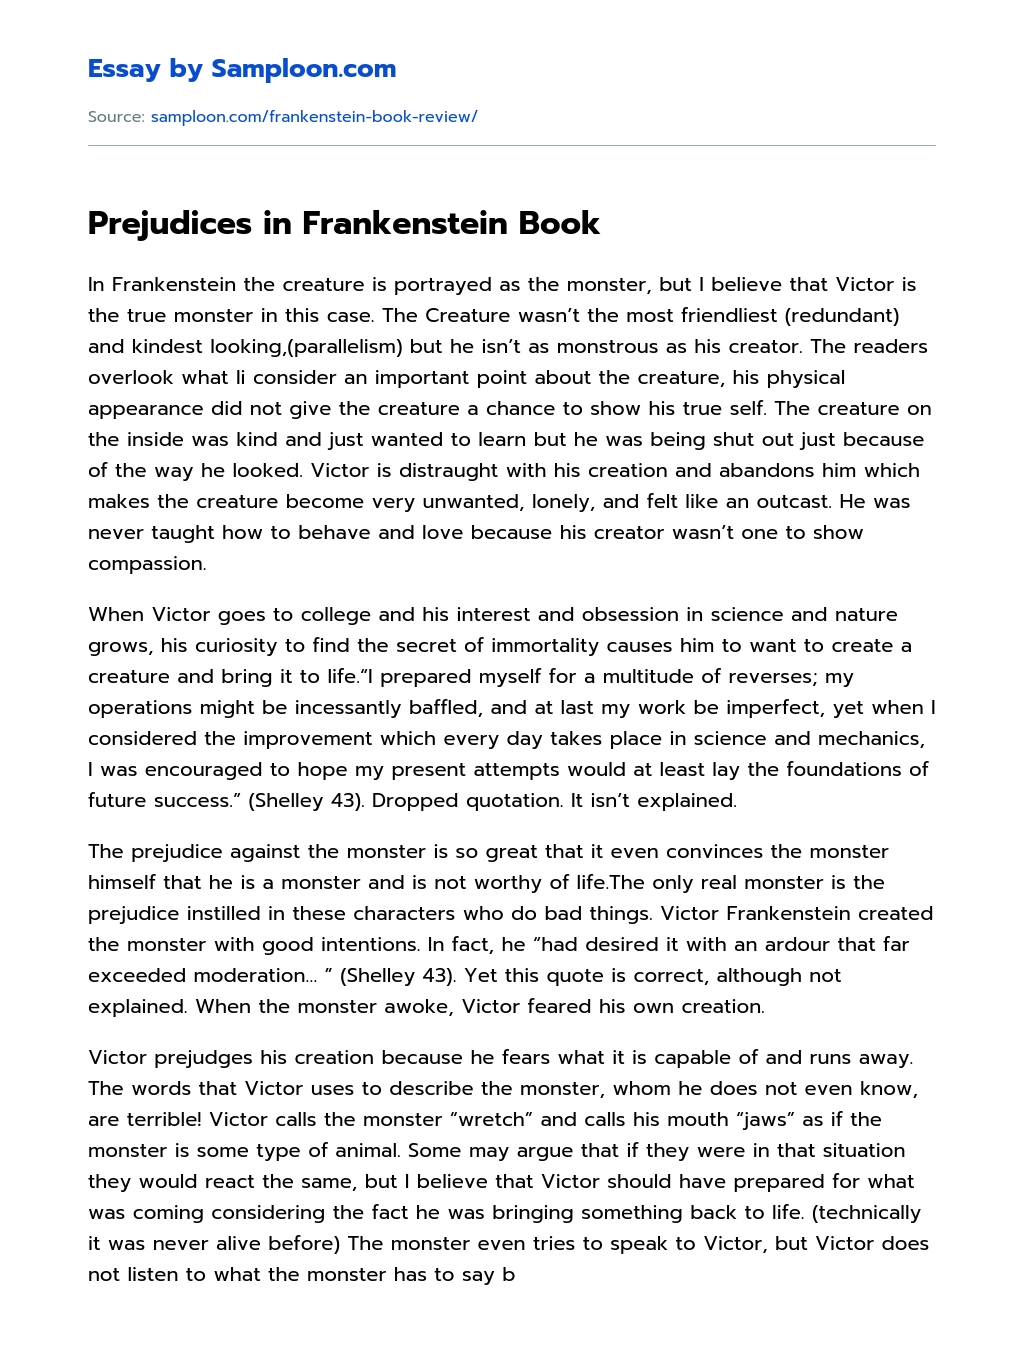 Prejudices in Frankenstein Book Character Analysis essay